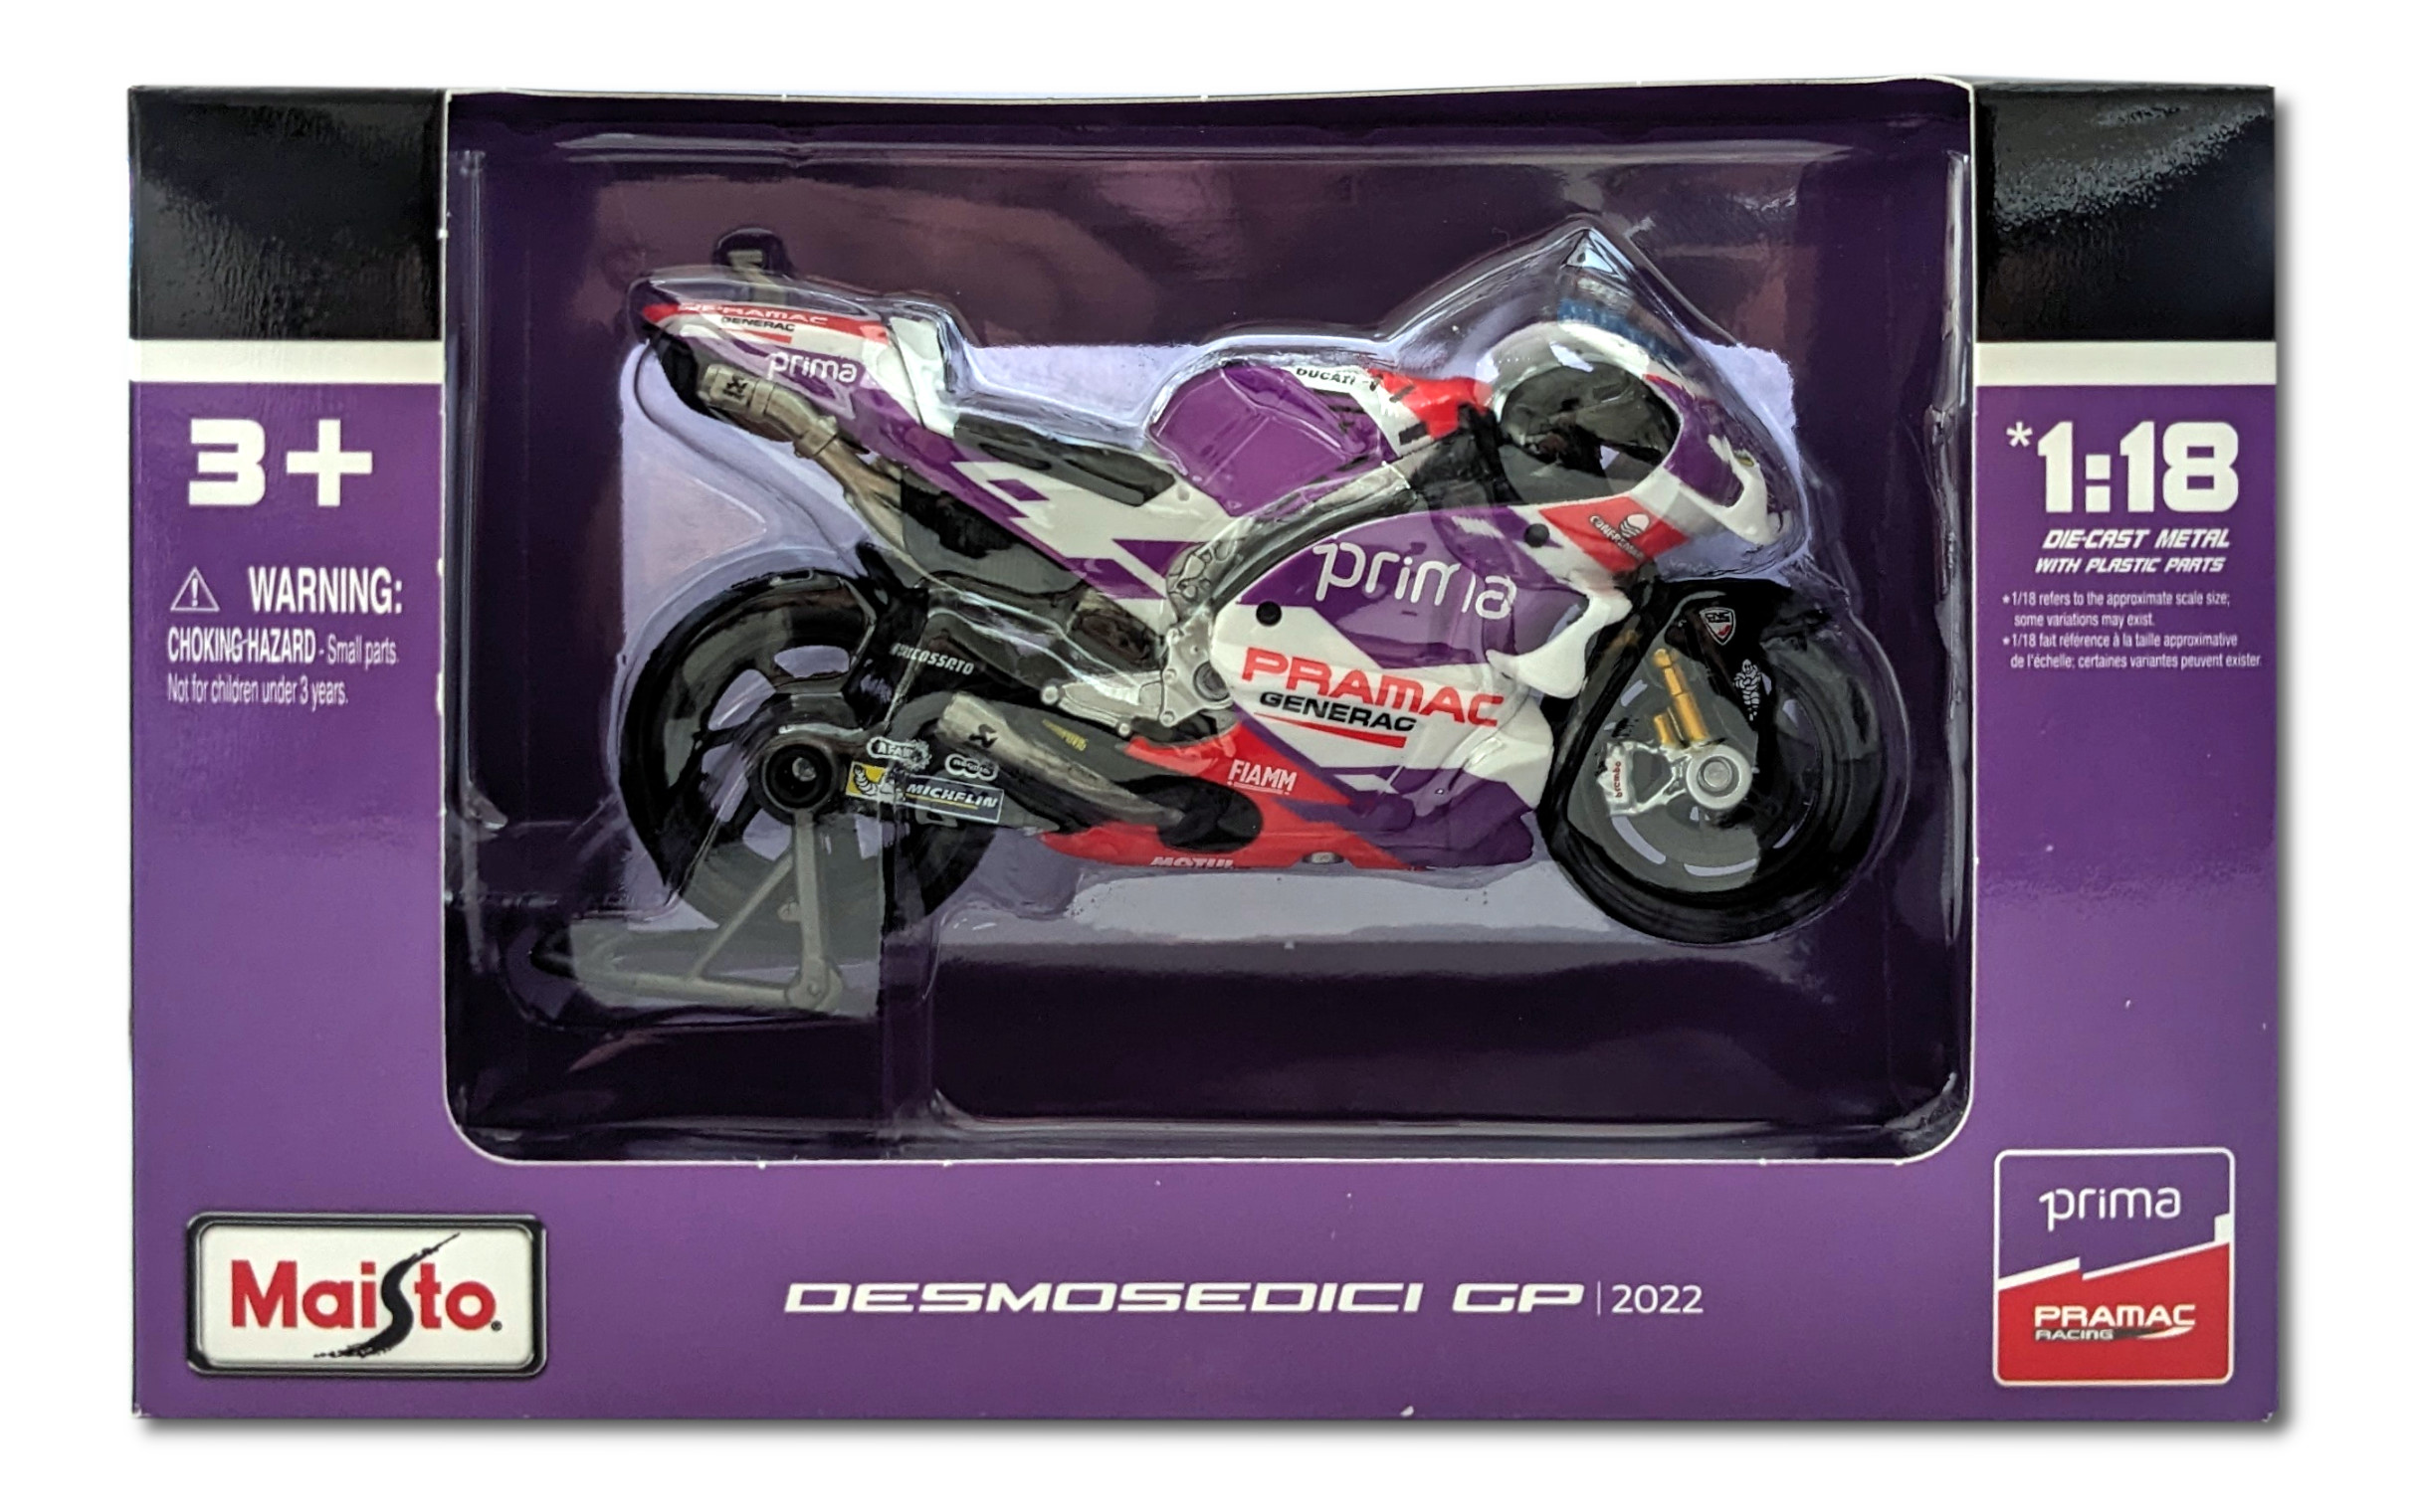 (Maßstab Spielzeugmotorrad Pramac #5 Ducati Modellmotorrad 1:18) Johann MAISTO Zarco MotoGP \'22